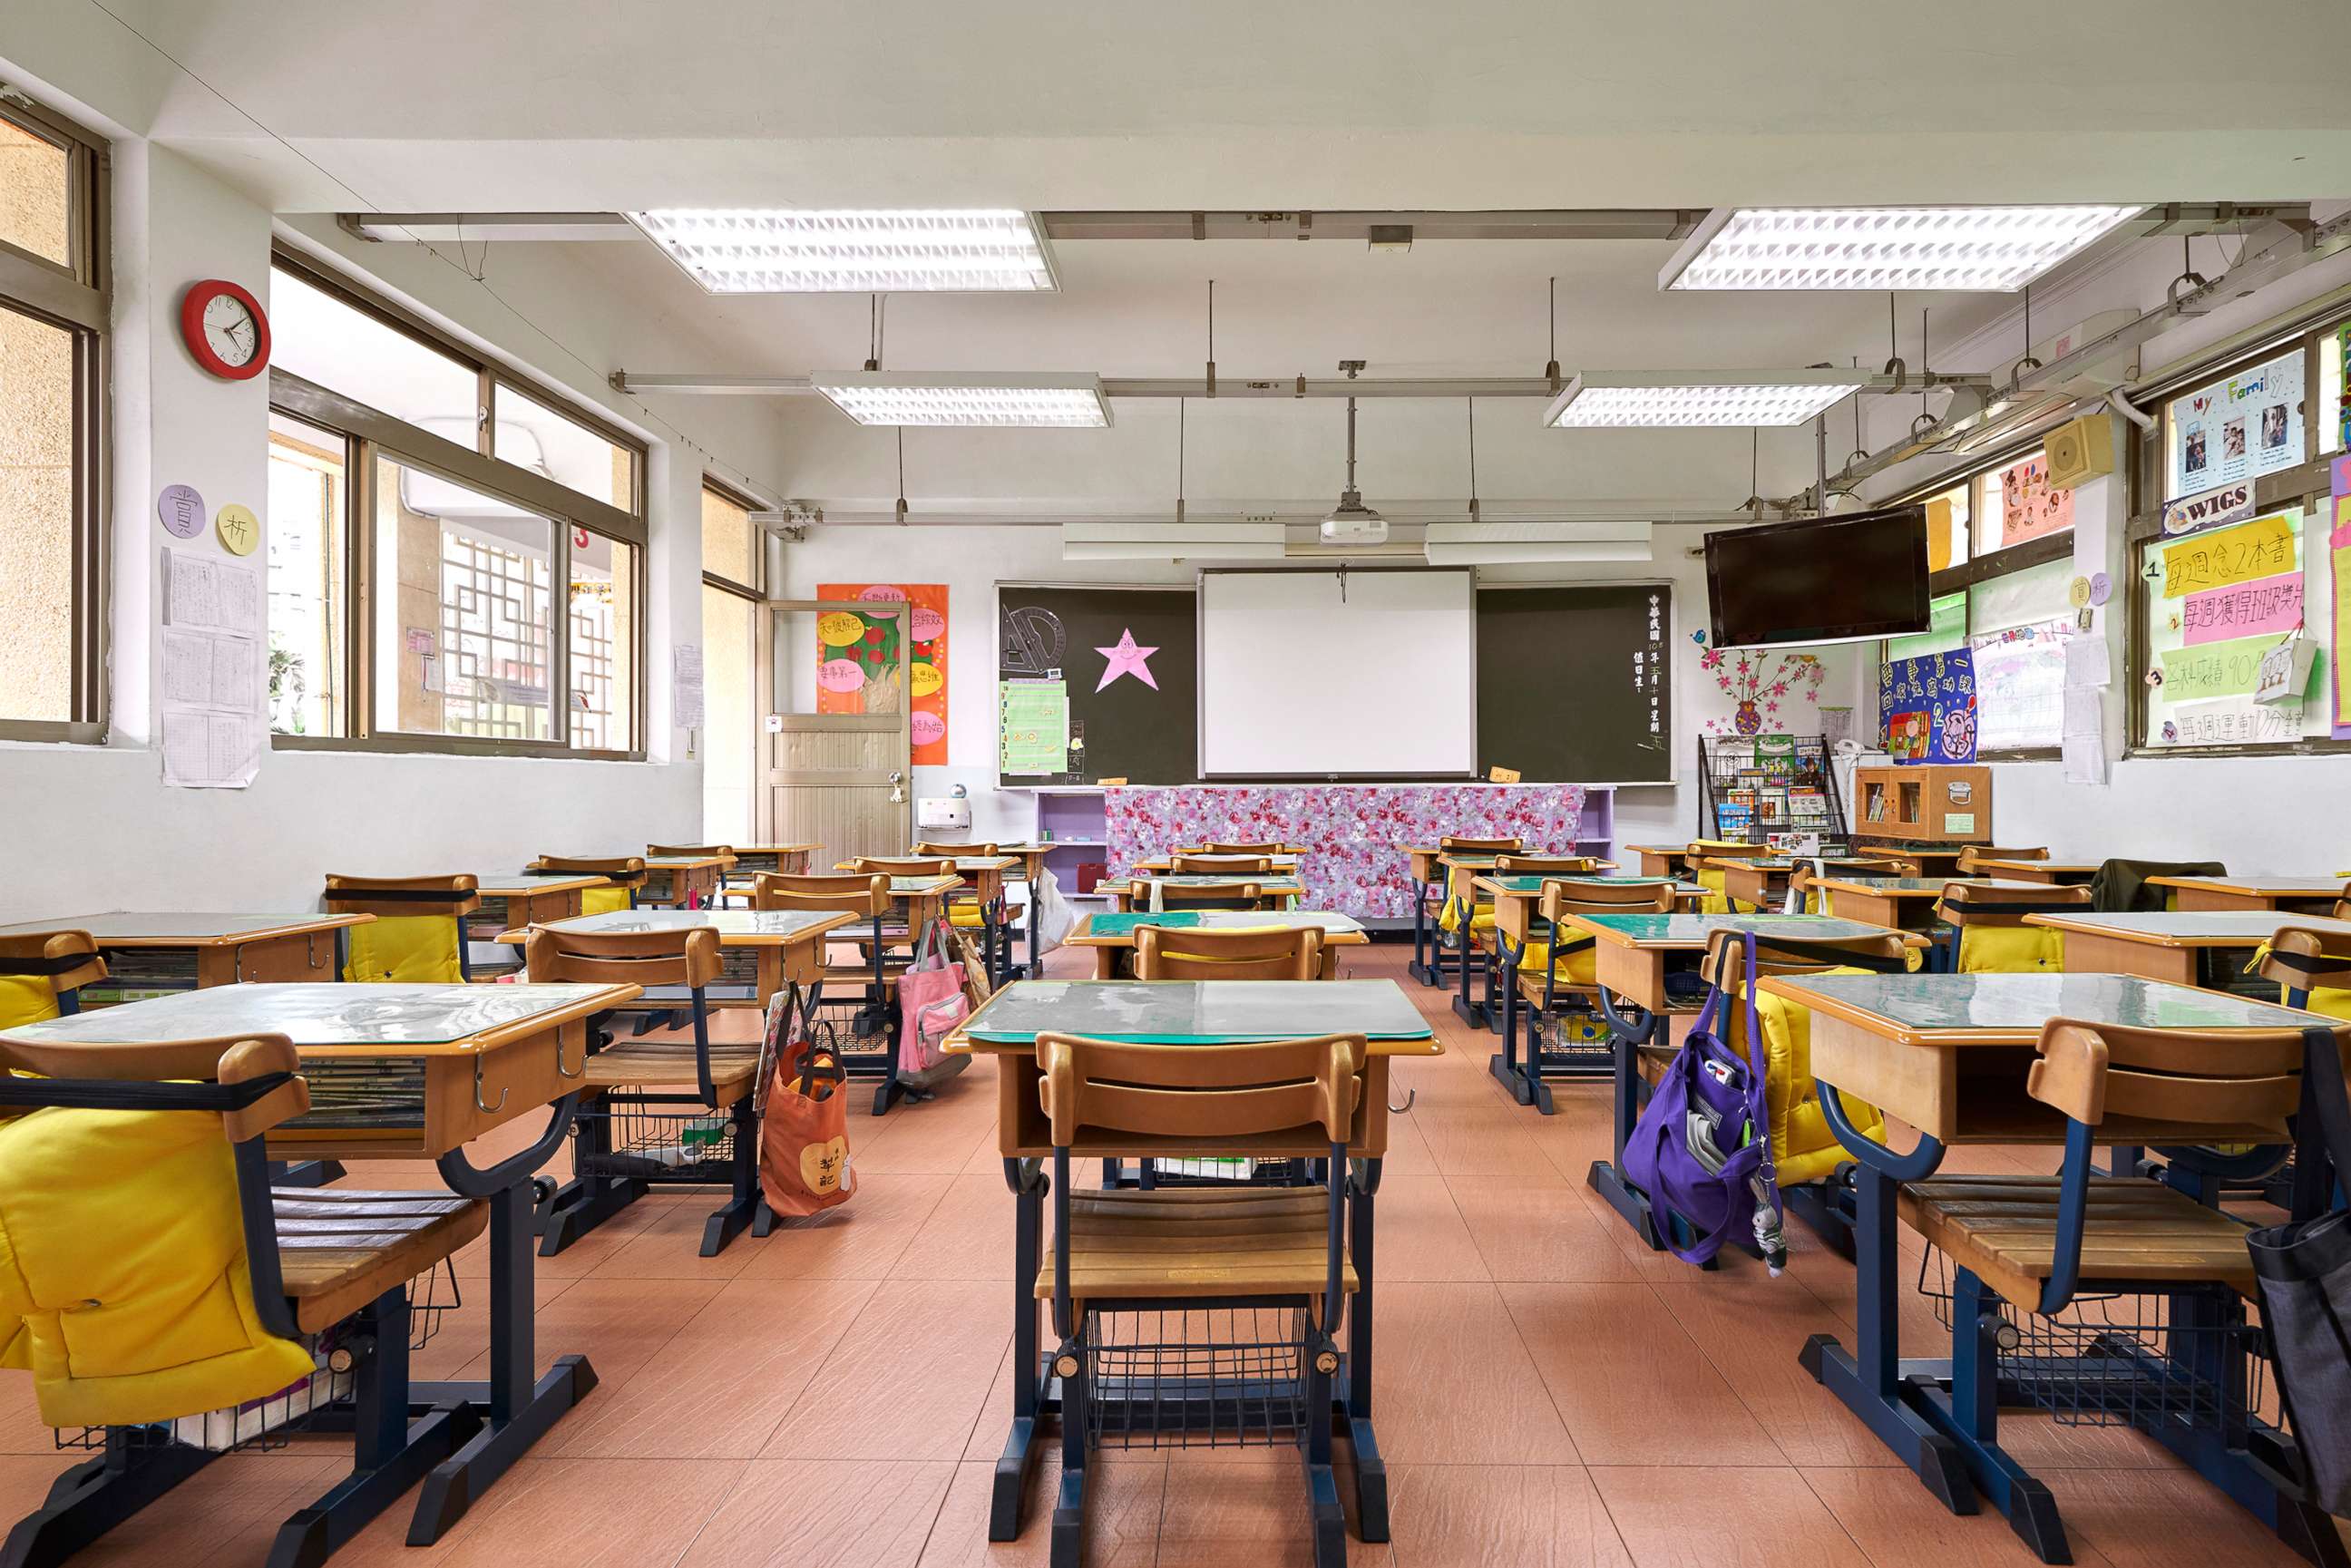 PHOTO: Interior of classroom in elementary school. Row of empty desks are in illuminated room.